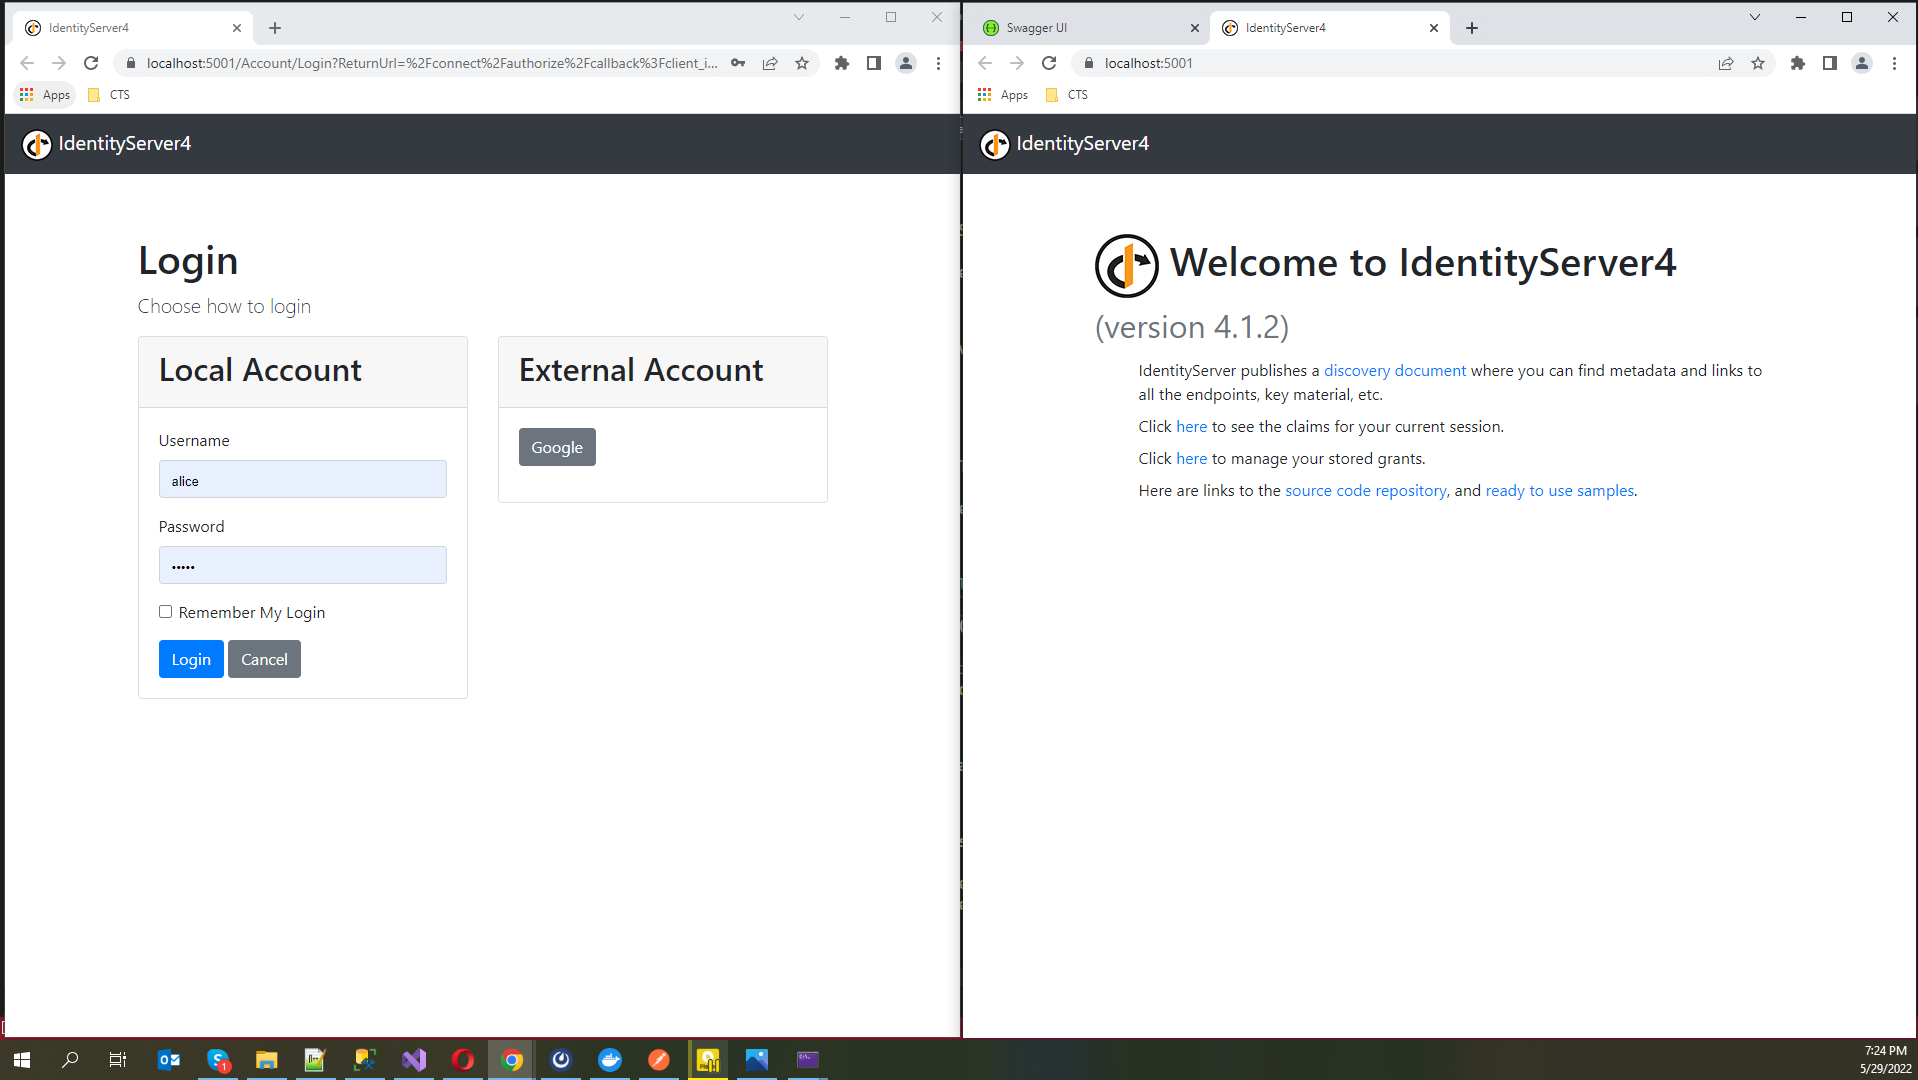 ui before login মাইক্রোসার্ভিসের সিকিউরিটি ও সিঙ্গেল সাইন-অন/সাইন-আউট(SSO): IdentityServer4(OAuth2,OpenID Connect), ASP.NET Identity